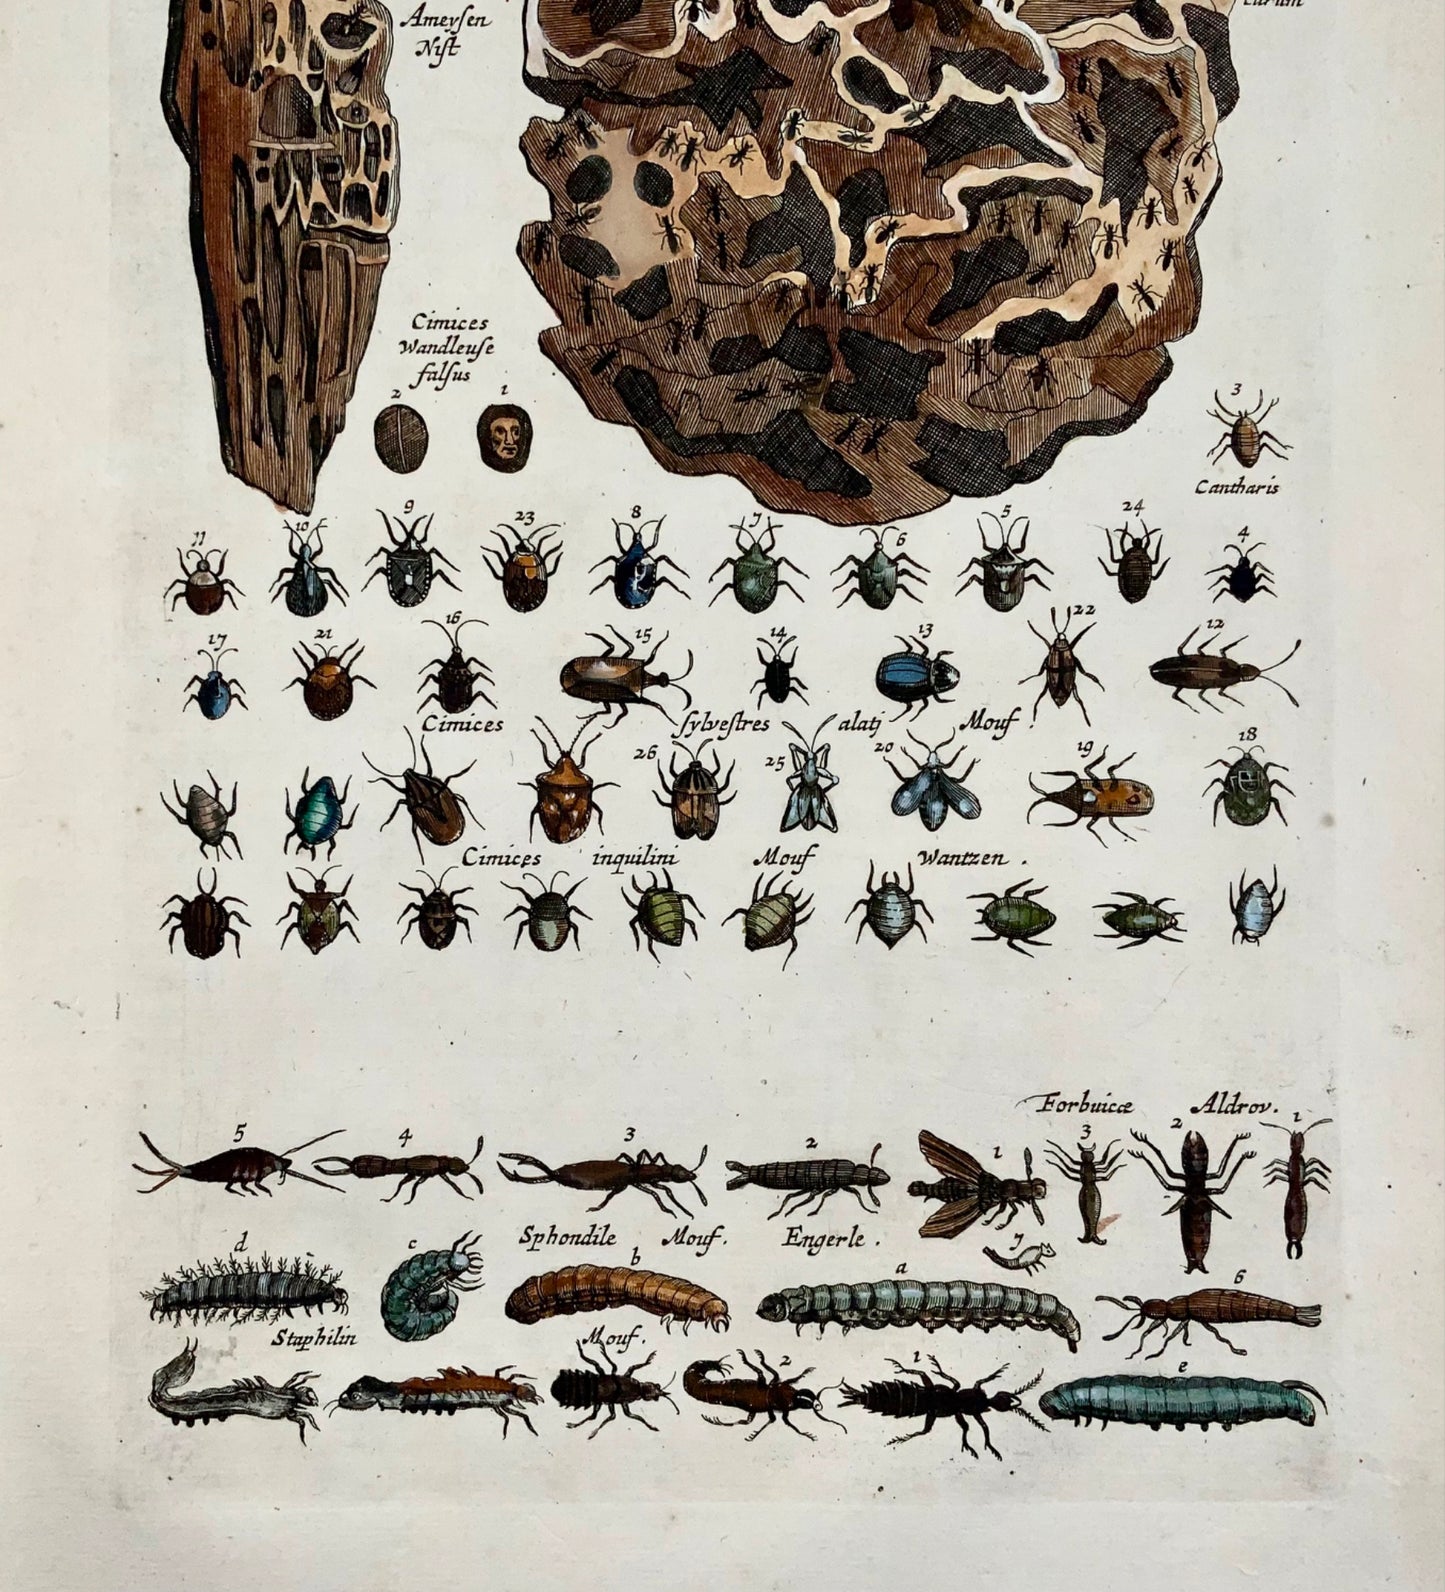 1657 Ant colony, caterpillars, insects, Matt. Merian, folio, hand coloured